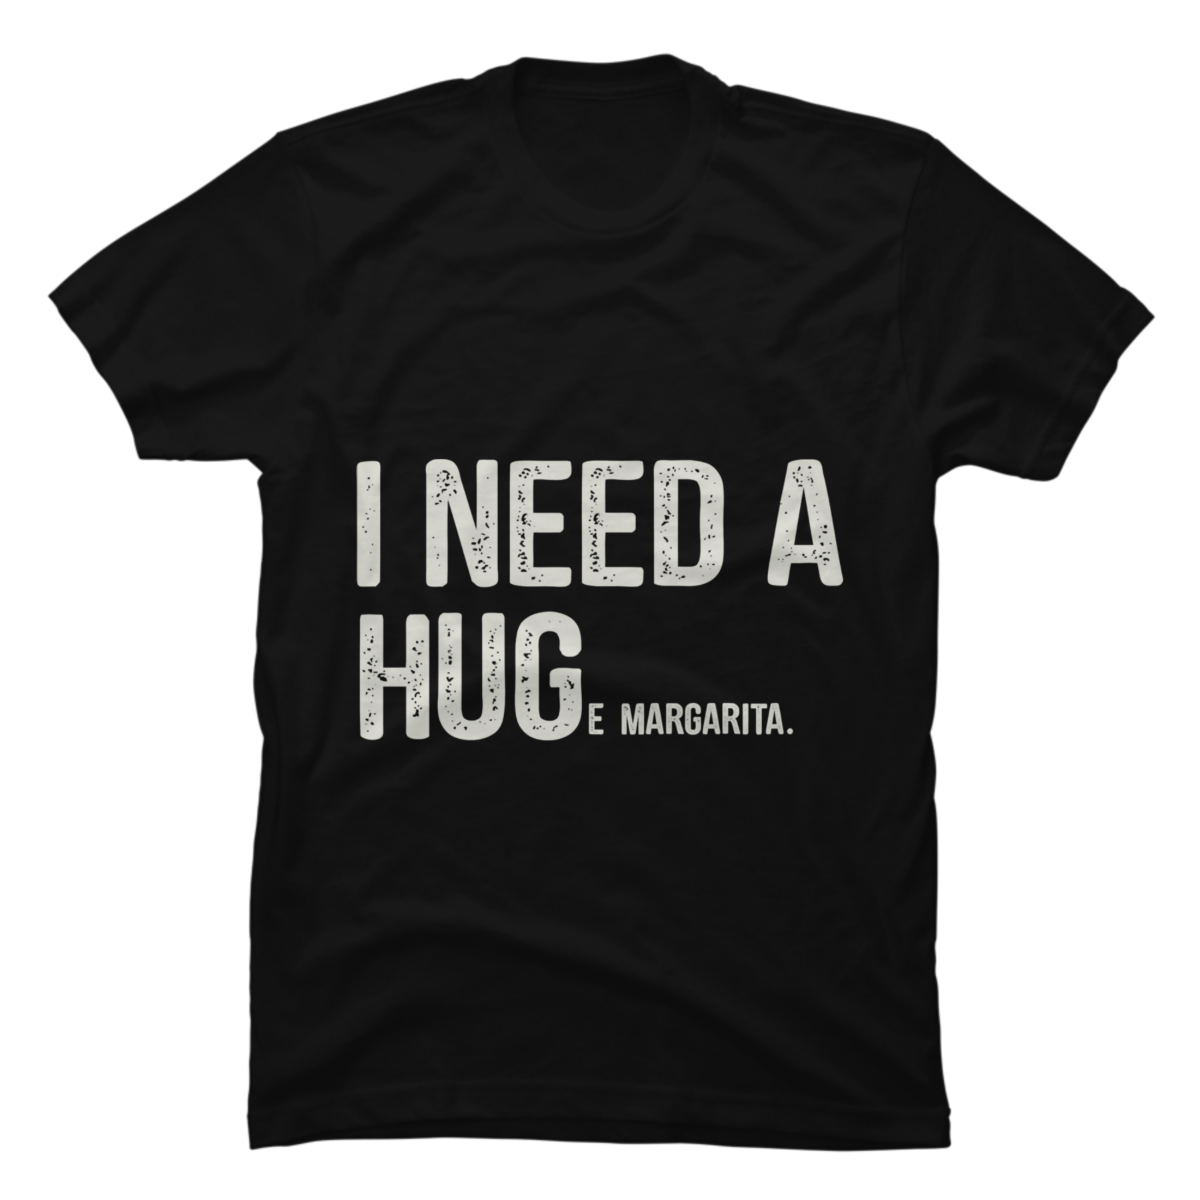 i need a huge margarita t shirt